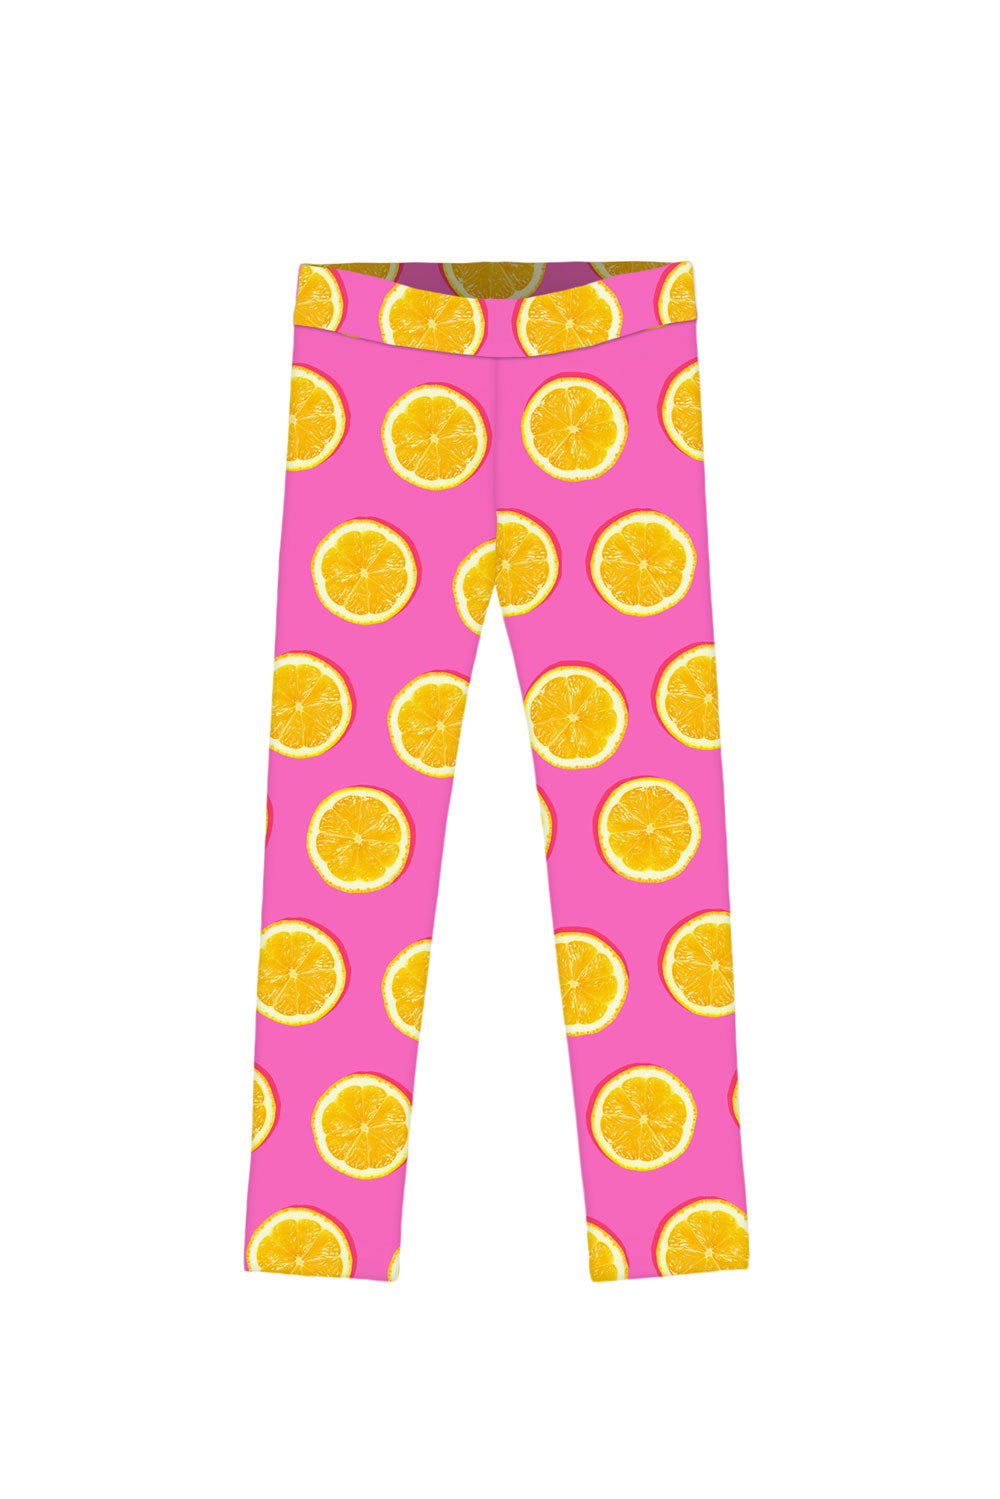 Tutti Frutti Lucy Pink Lemon Print Cute Summer Casual Leggings - Girls - Pineapple Clothing